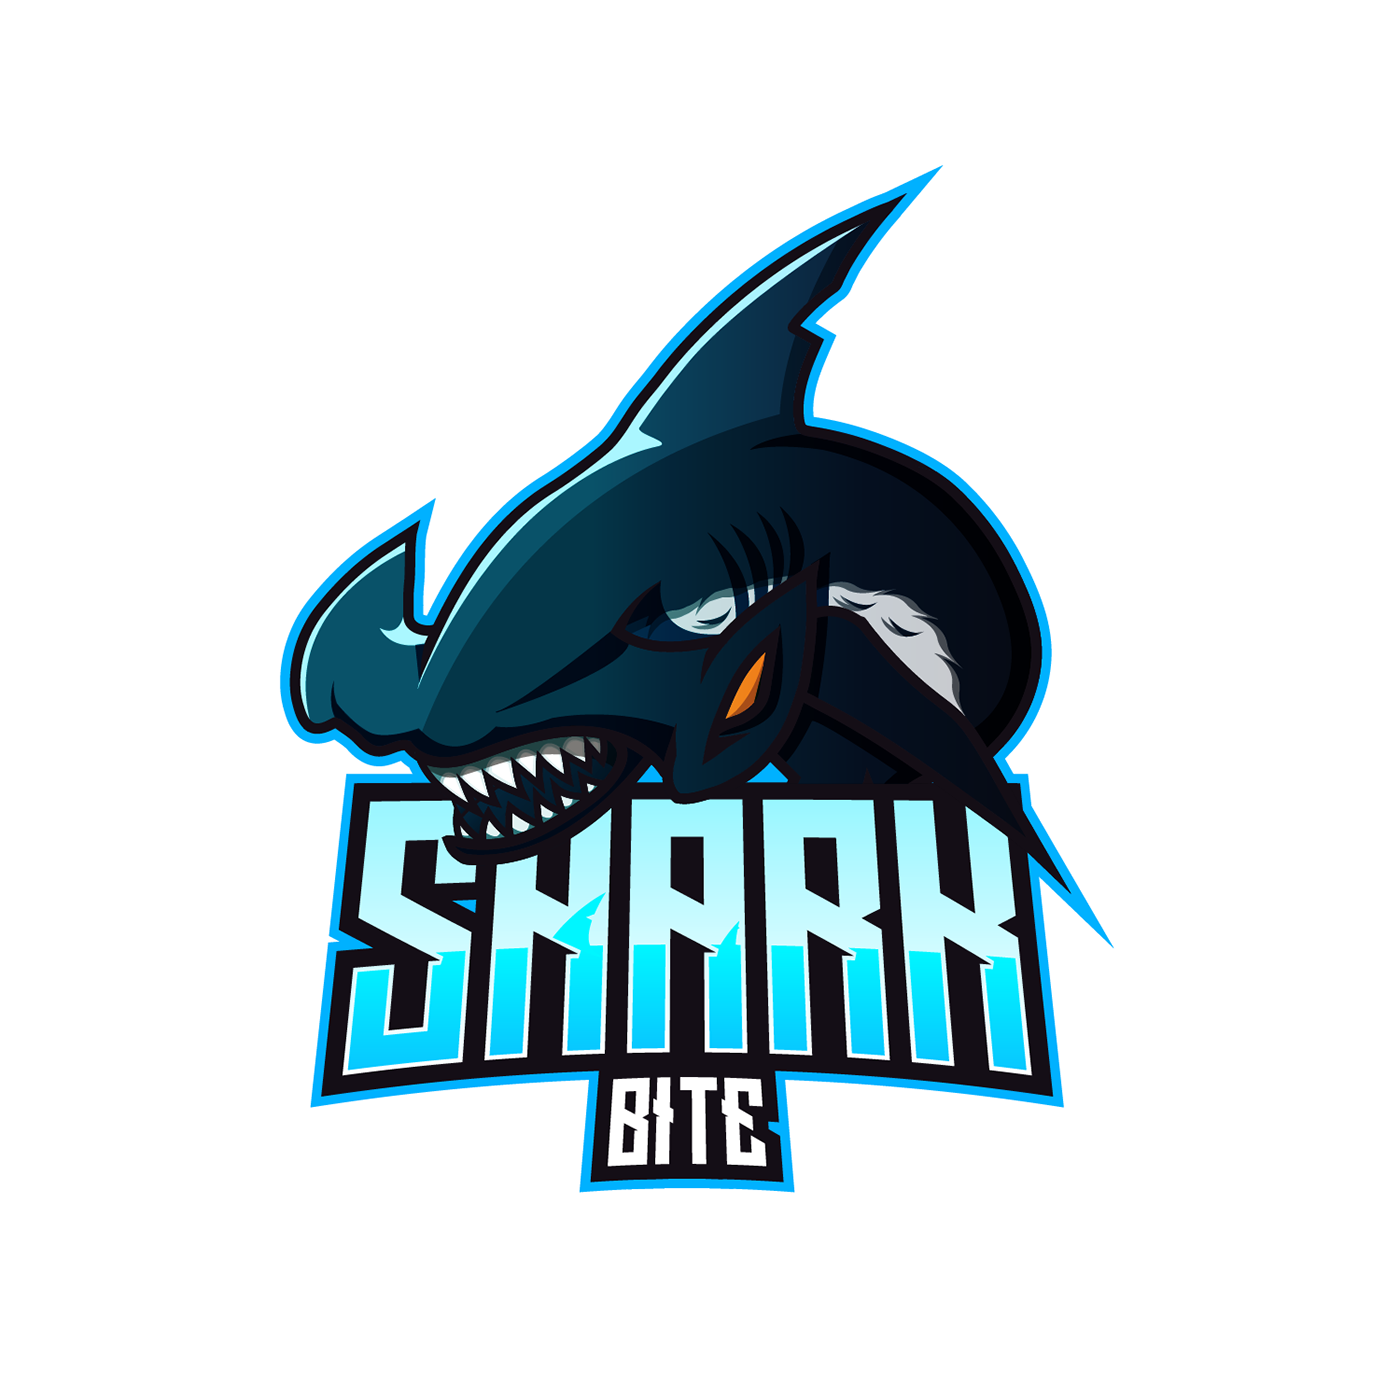 animal E-Sports hammerhead Illustrator logo shark water